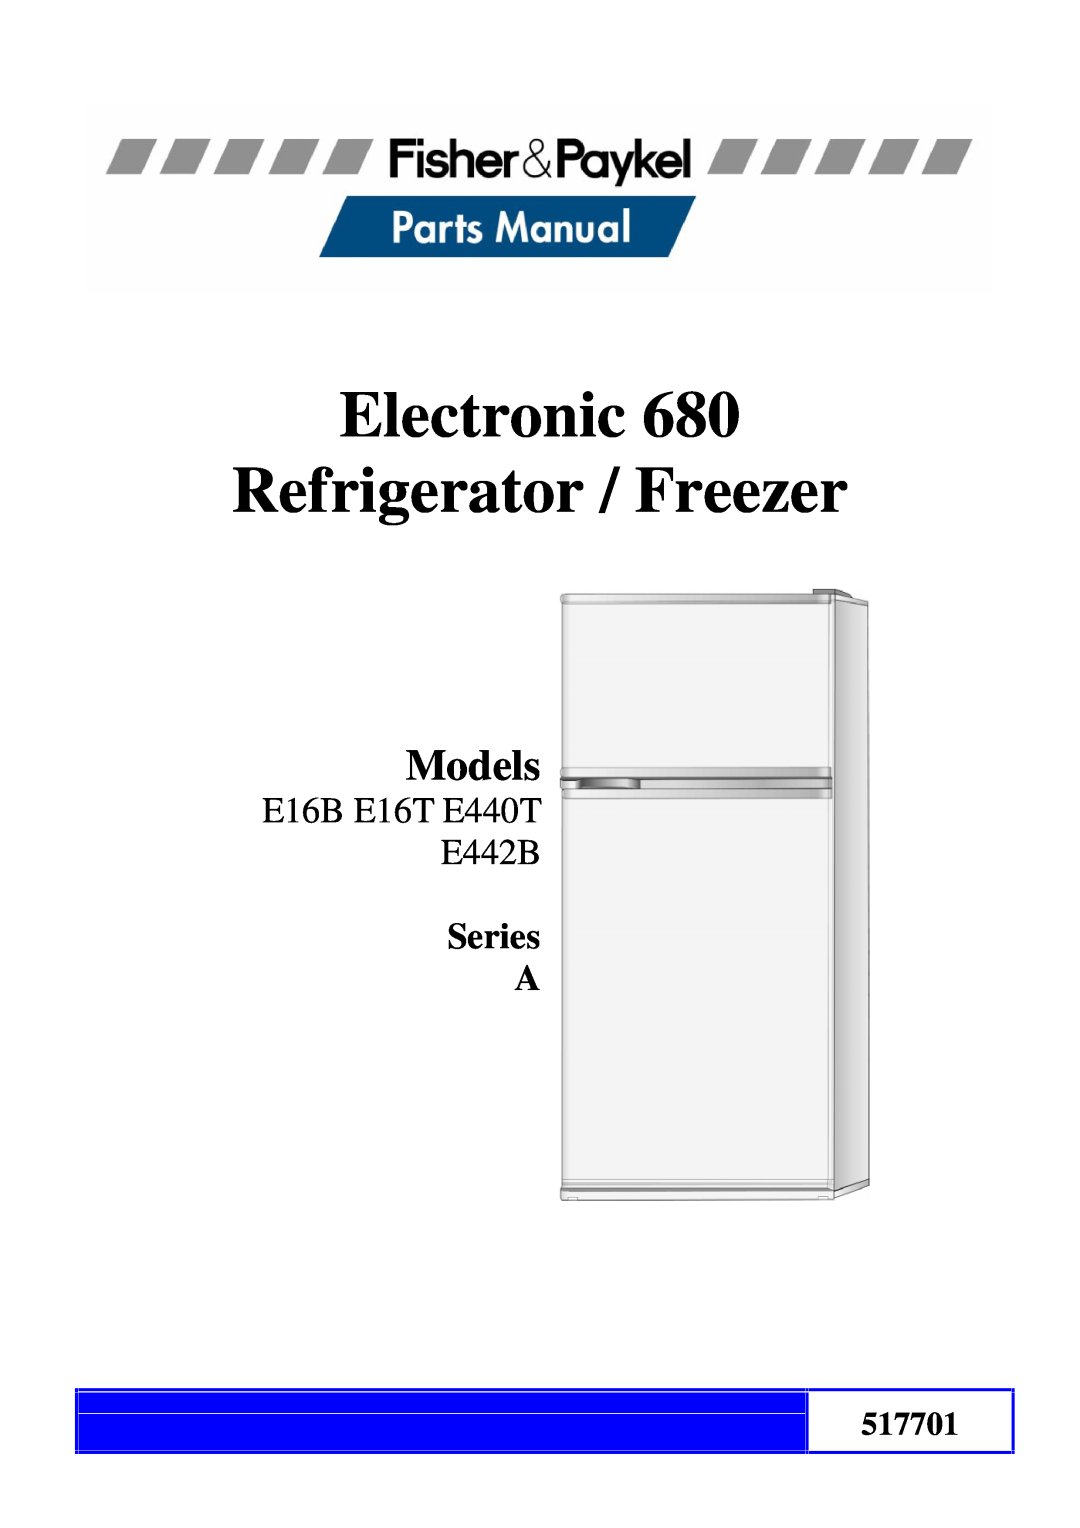 LG Electronics manual Electronic Refrigerator / Freezer, Models, E16B E16T E440T E442B, Series A, 517701 